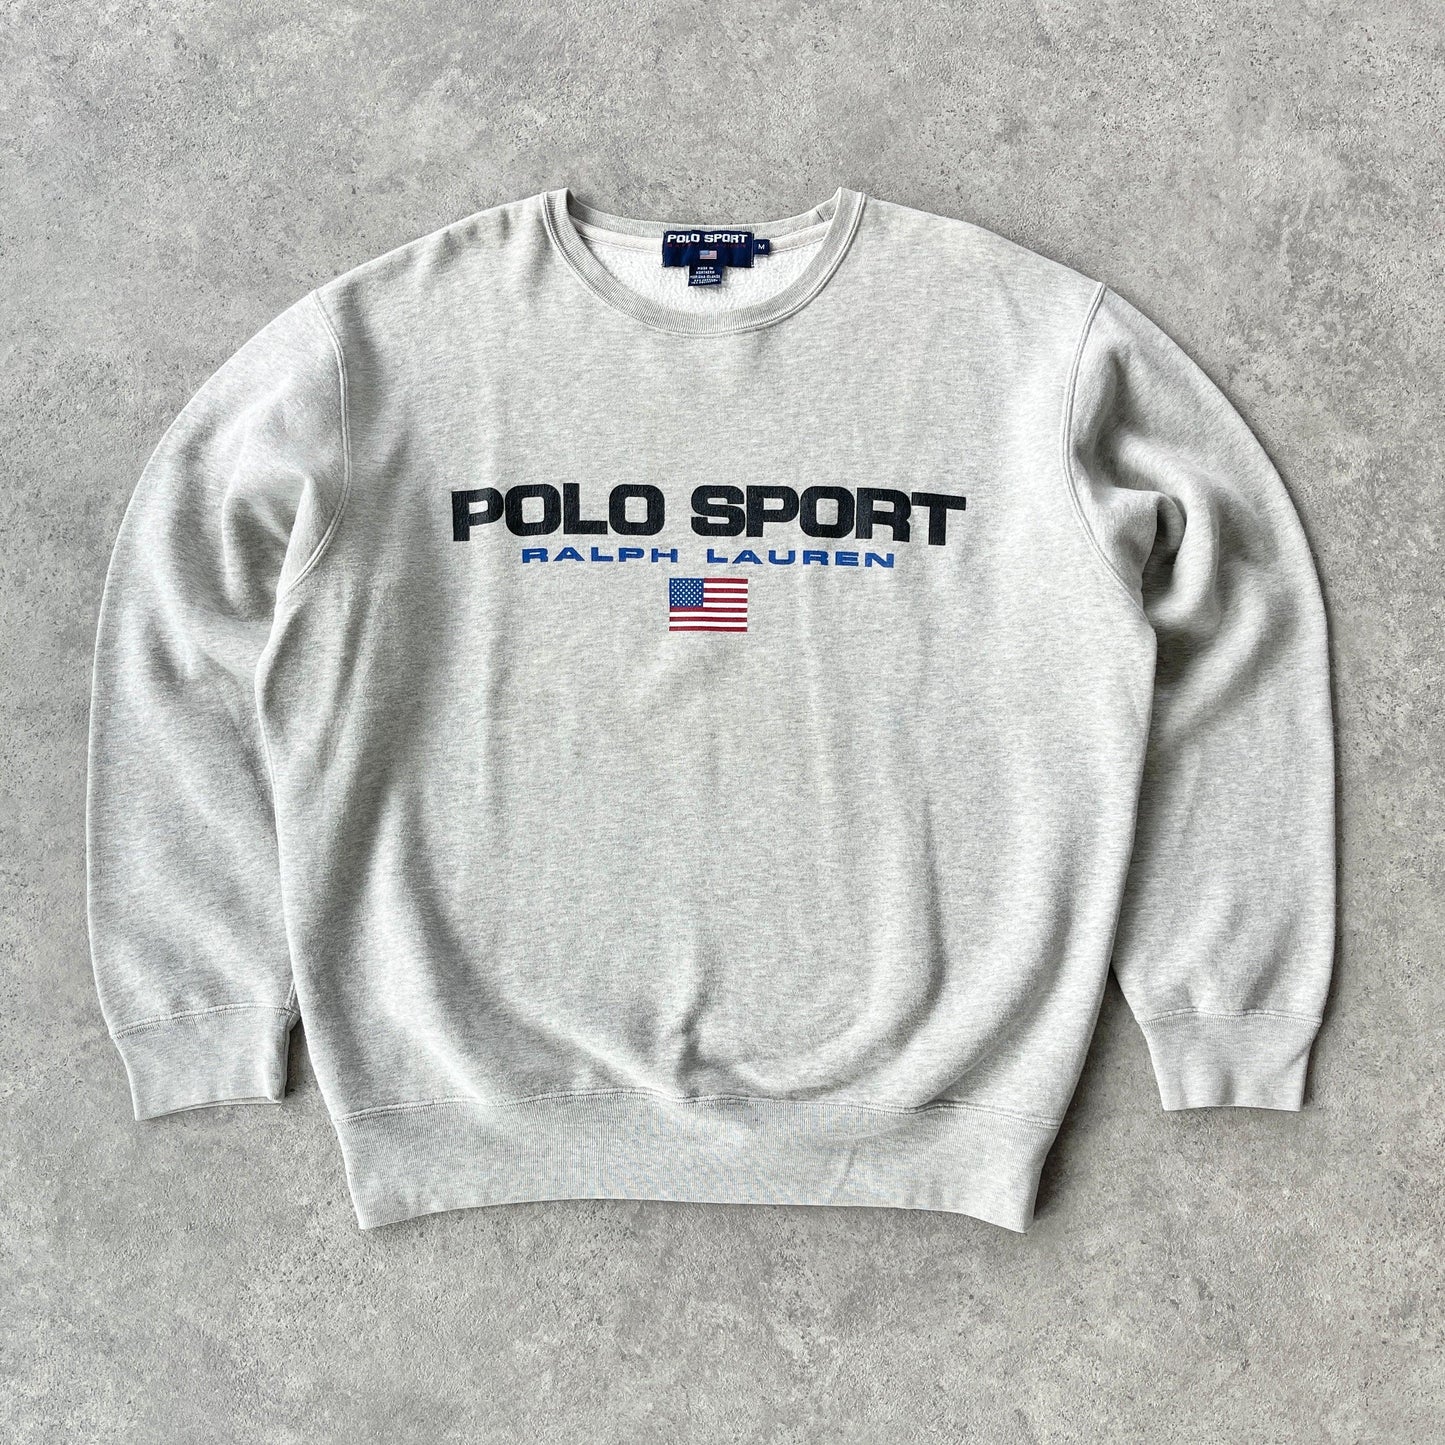 Polo Sport Ralph Lauren 1990s heavyweight spellout sweatshirt (L) - Known Source